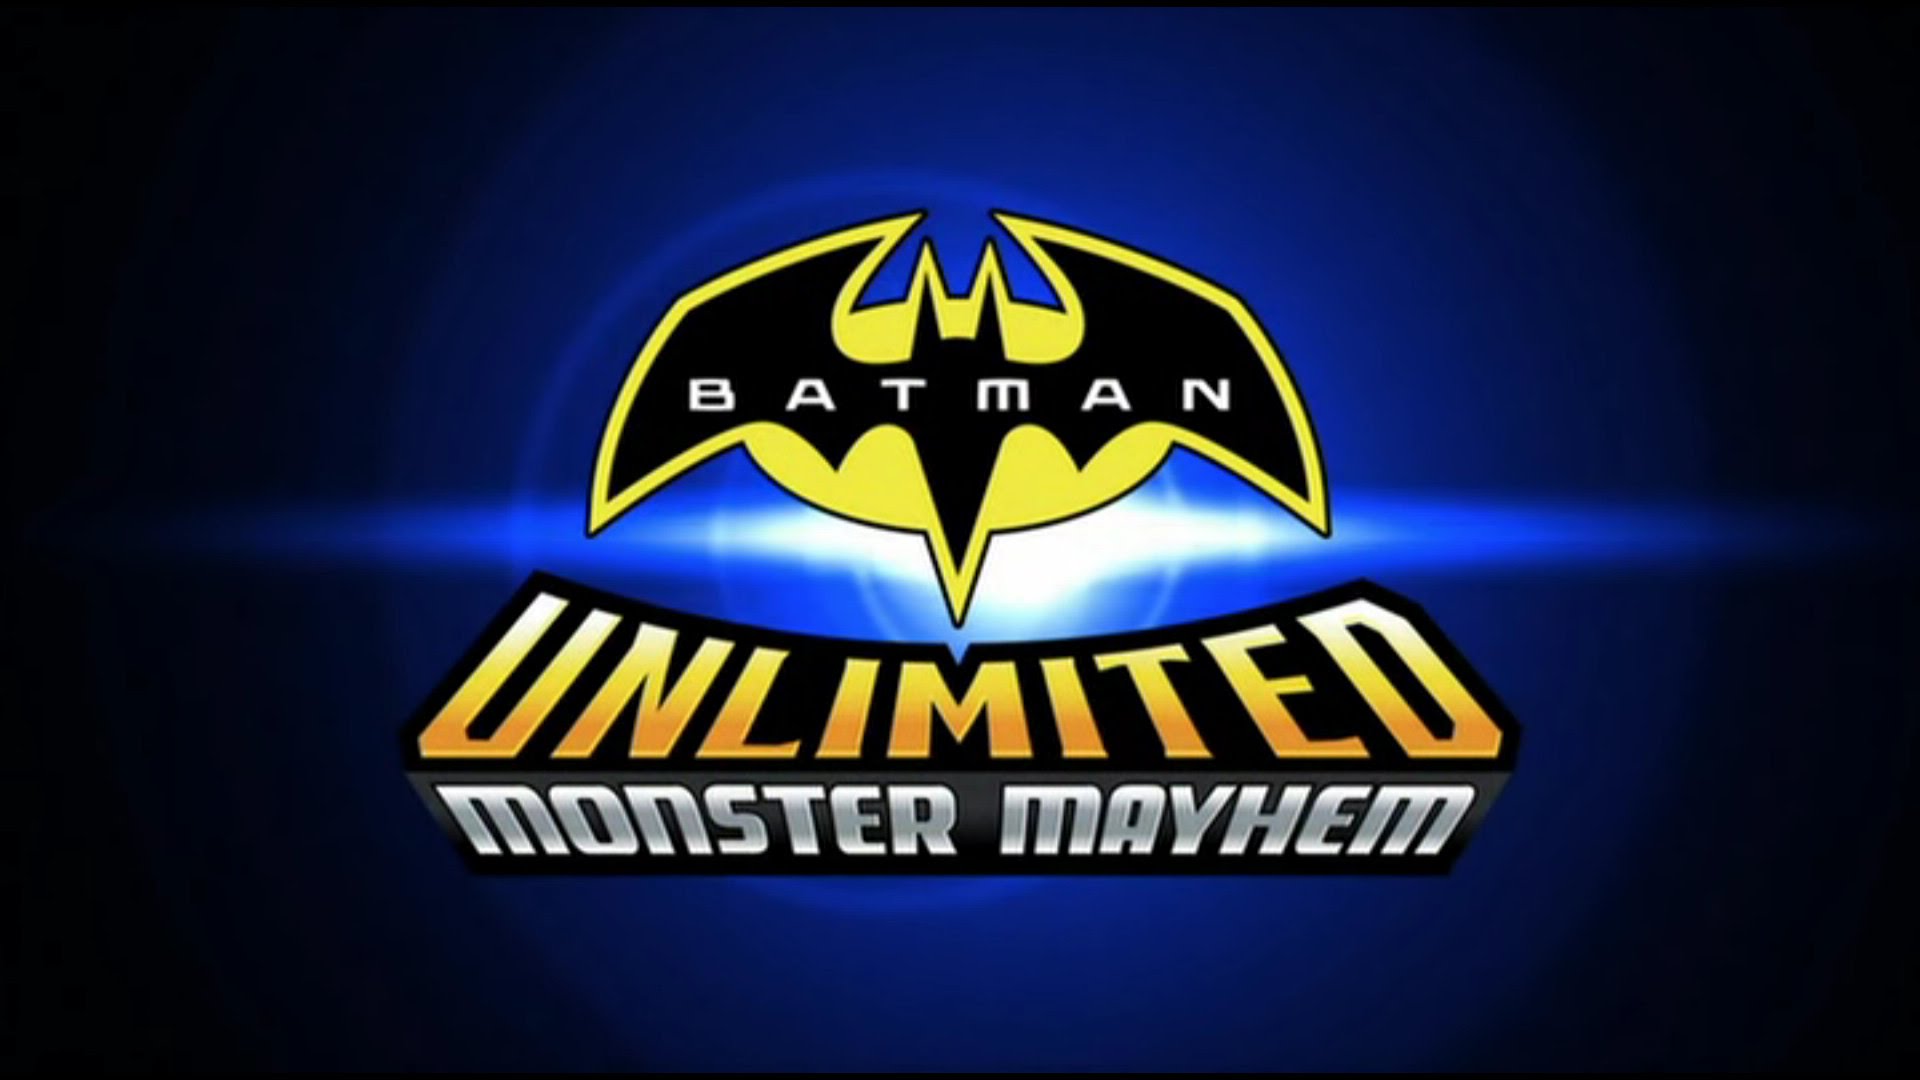 Batman Unlimited Monster Mayhem Wallpaper And Background Image